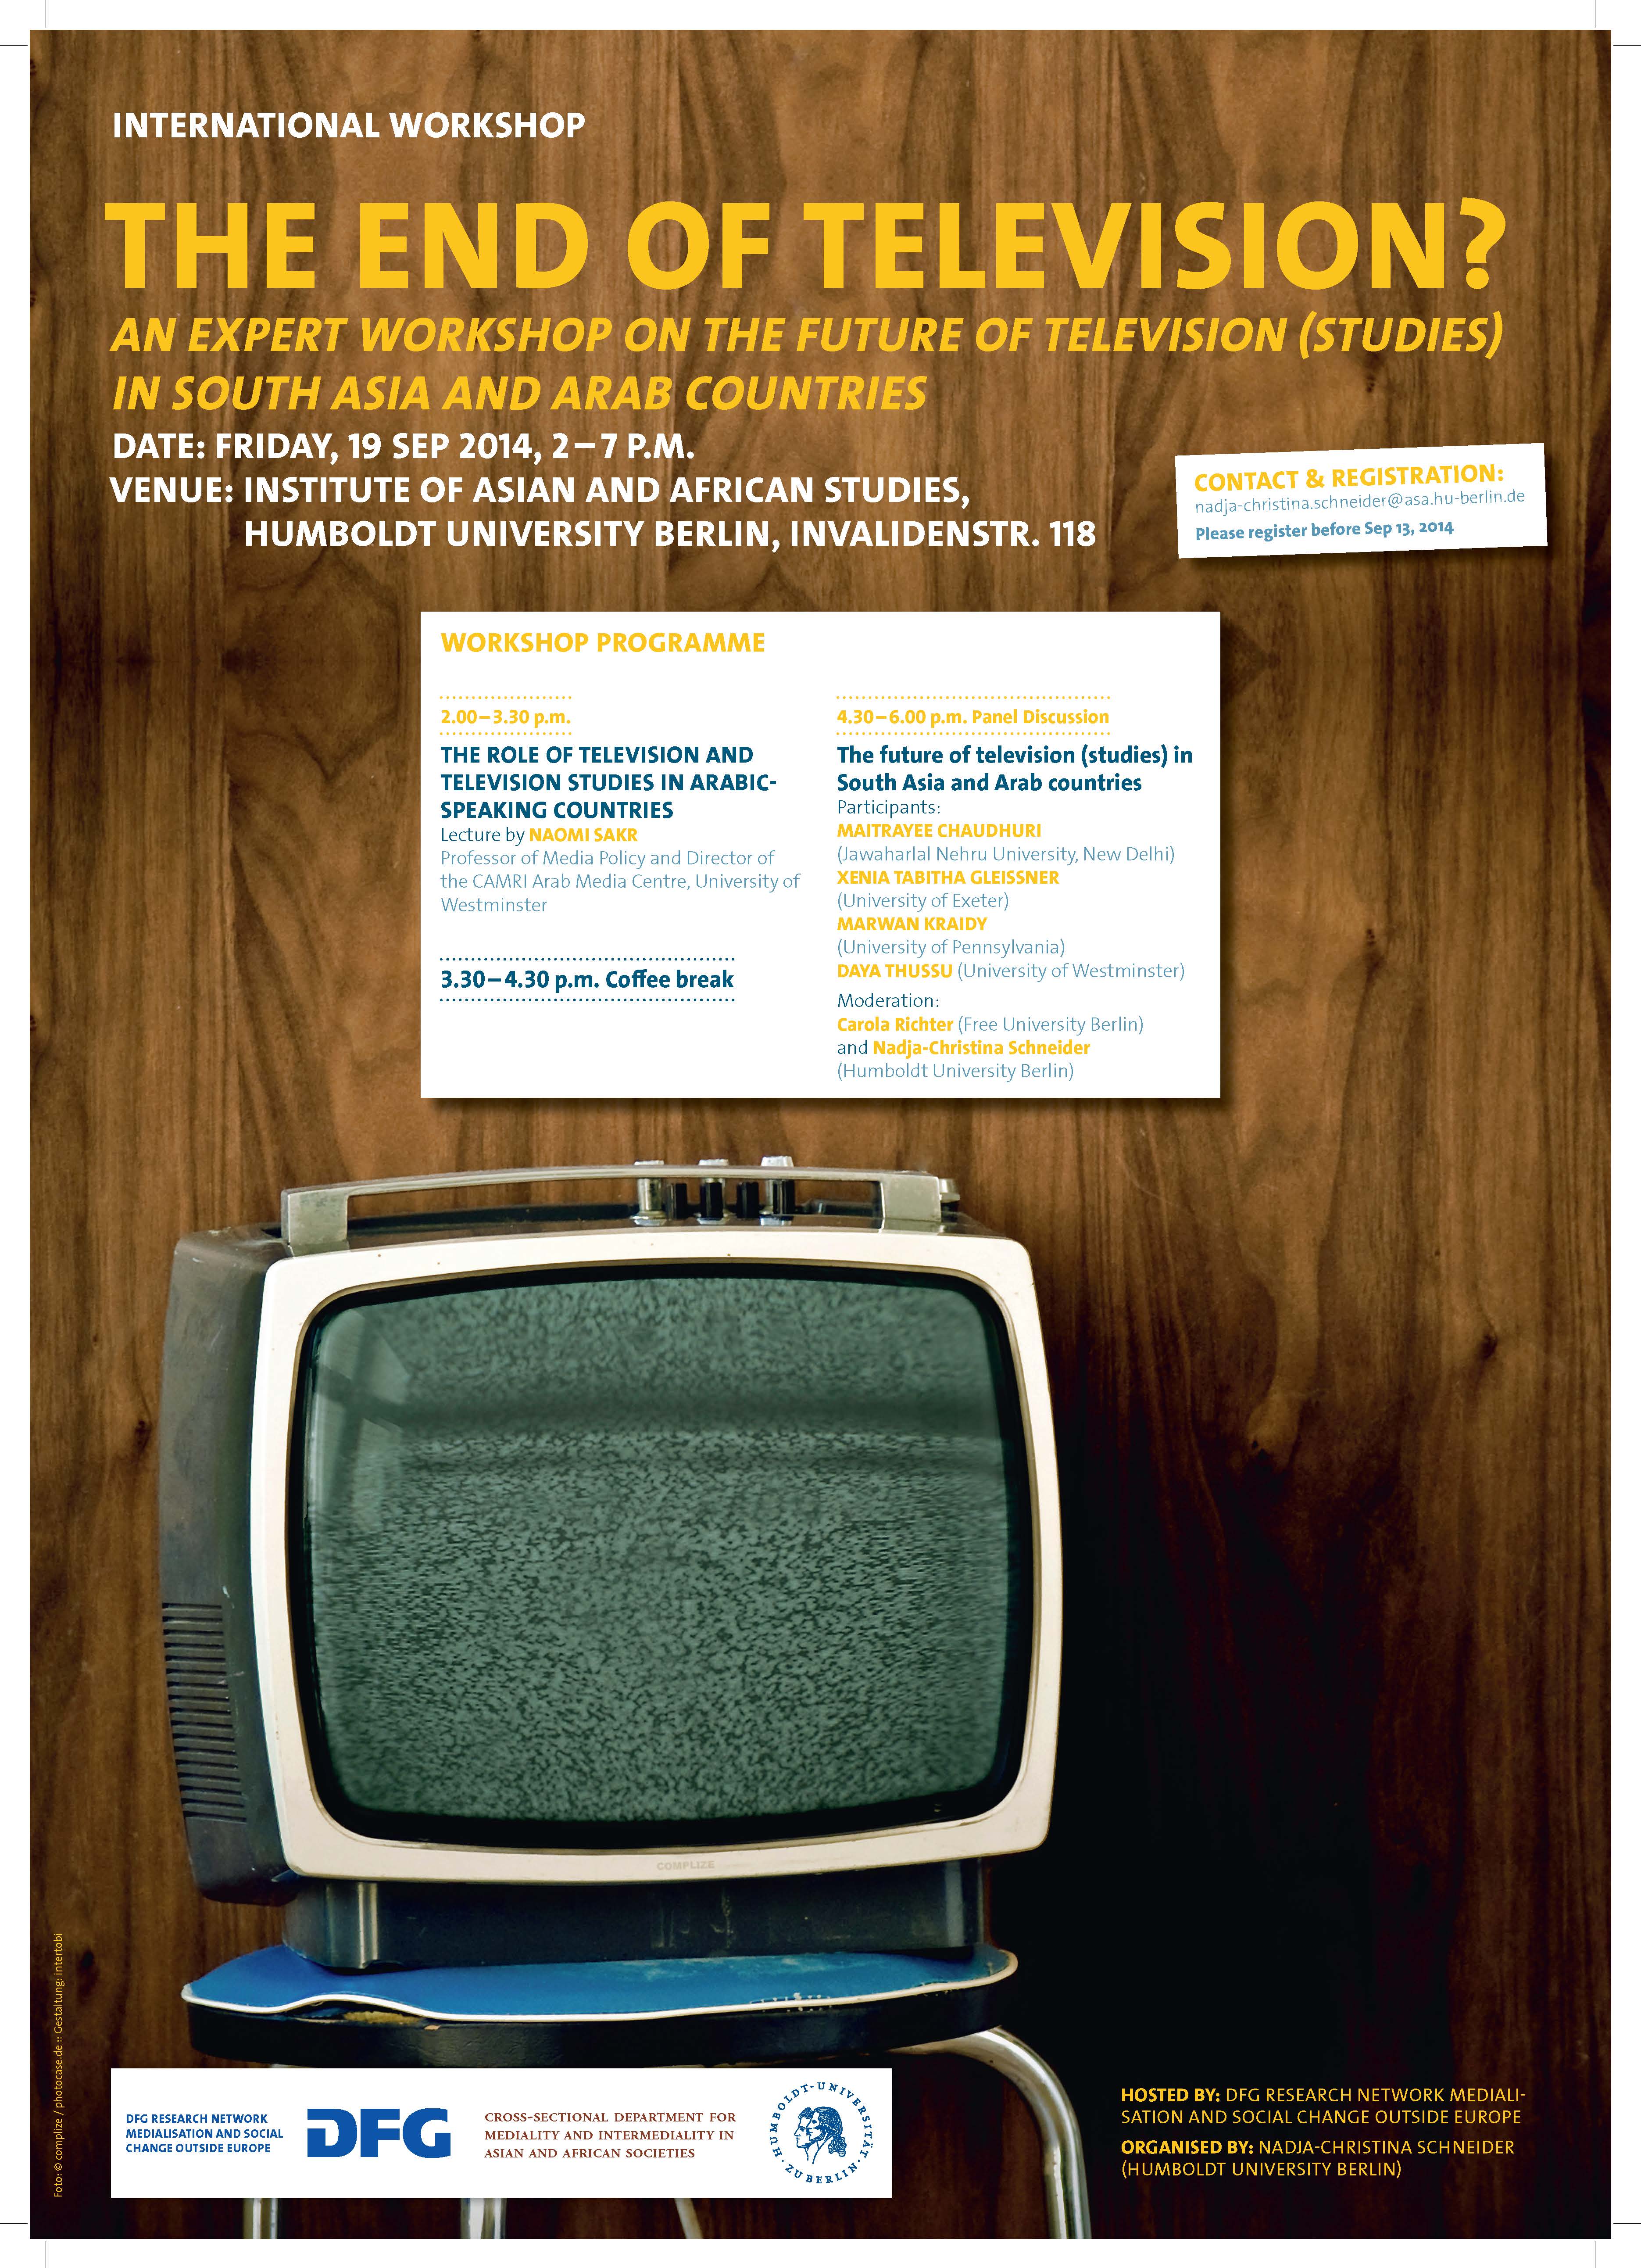 International Workshop - The End of Television?